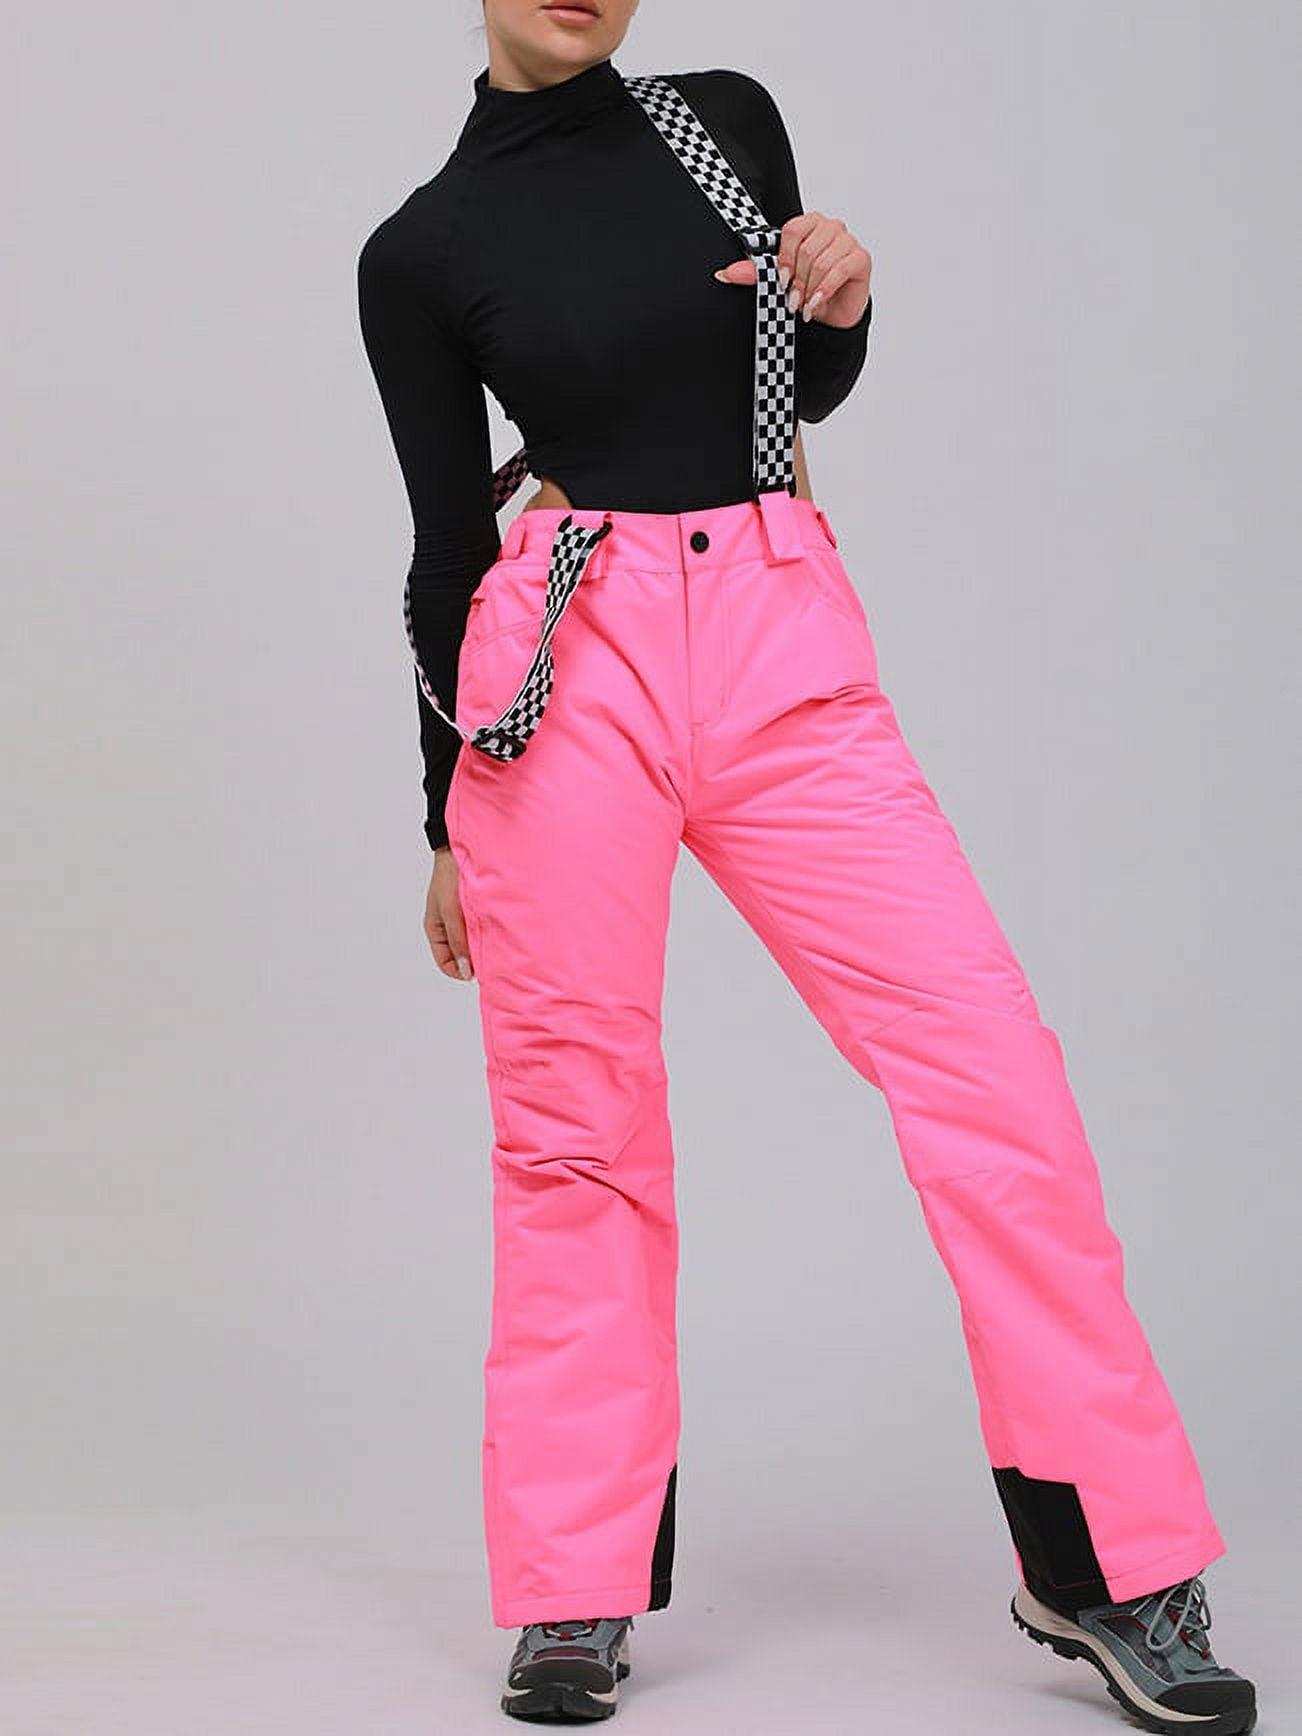 Women Insulated Snow Pants Waterproof Outdoor Ski Bibs with Adjustable  Checkered Suspenders Pink XL